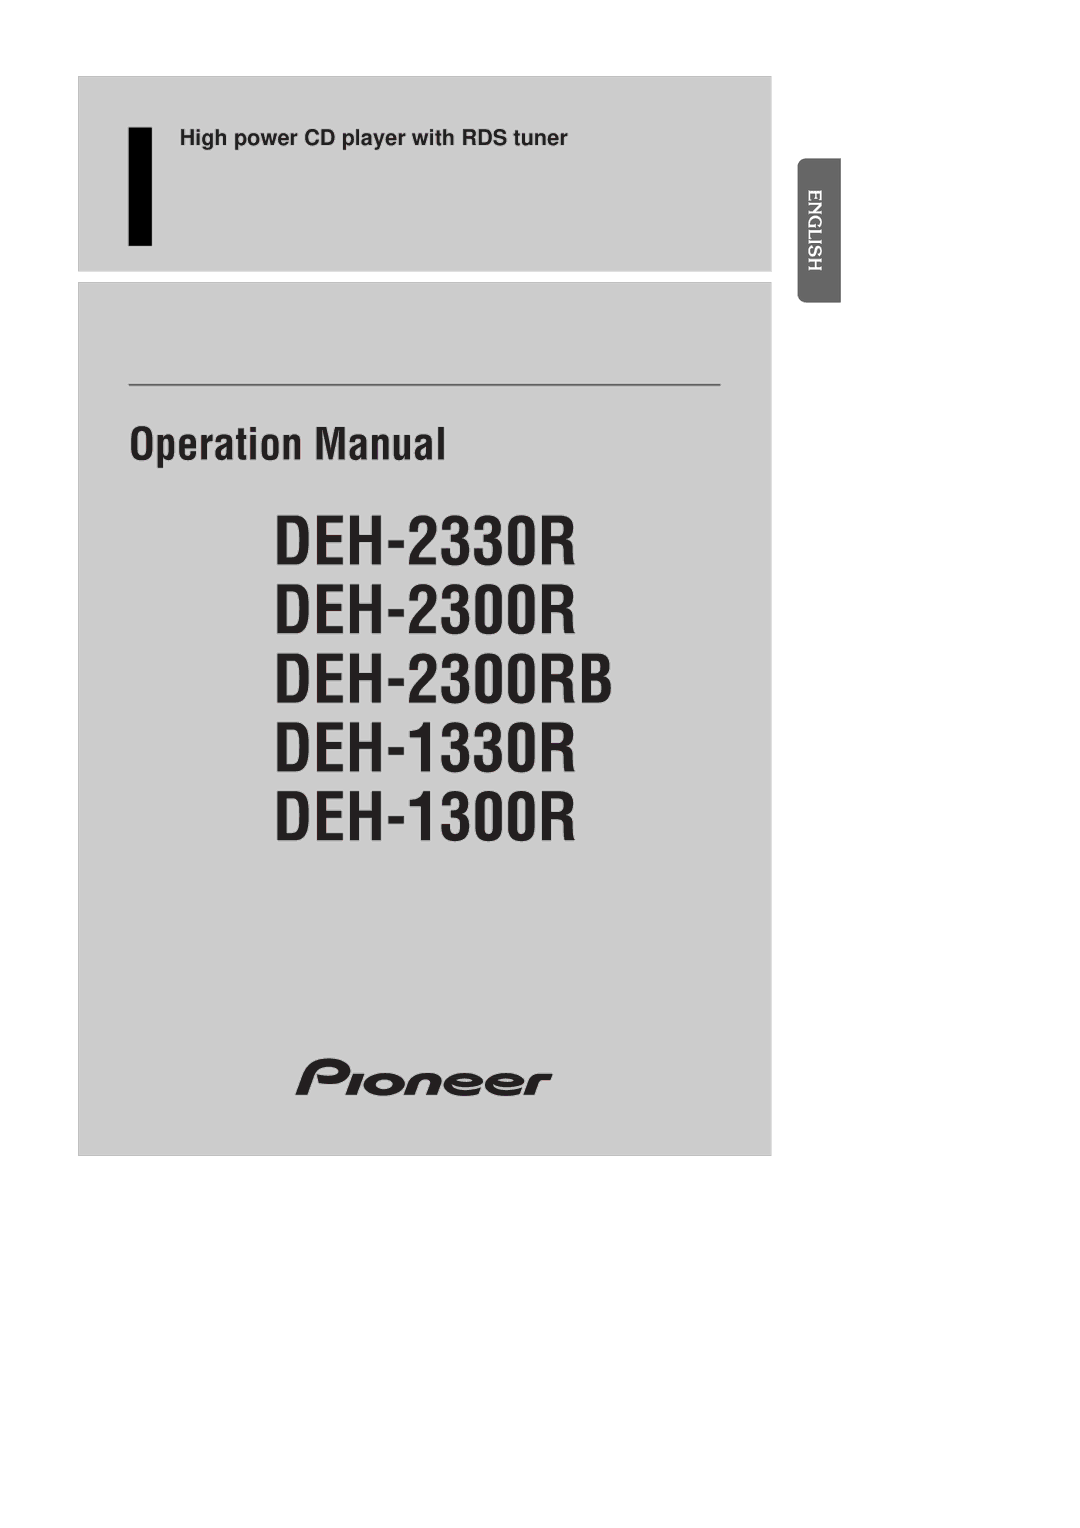 Pioneer operation manual DEH-2330R DEH-2300R DEH-2300RB DEH-1330R DEH-1300R 